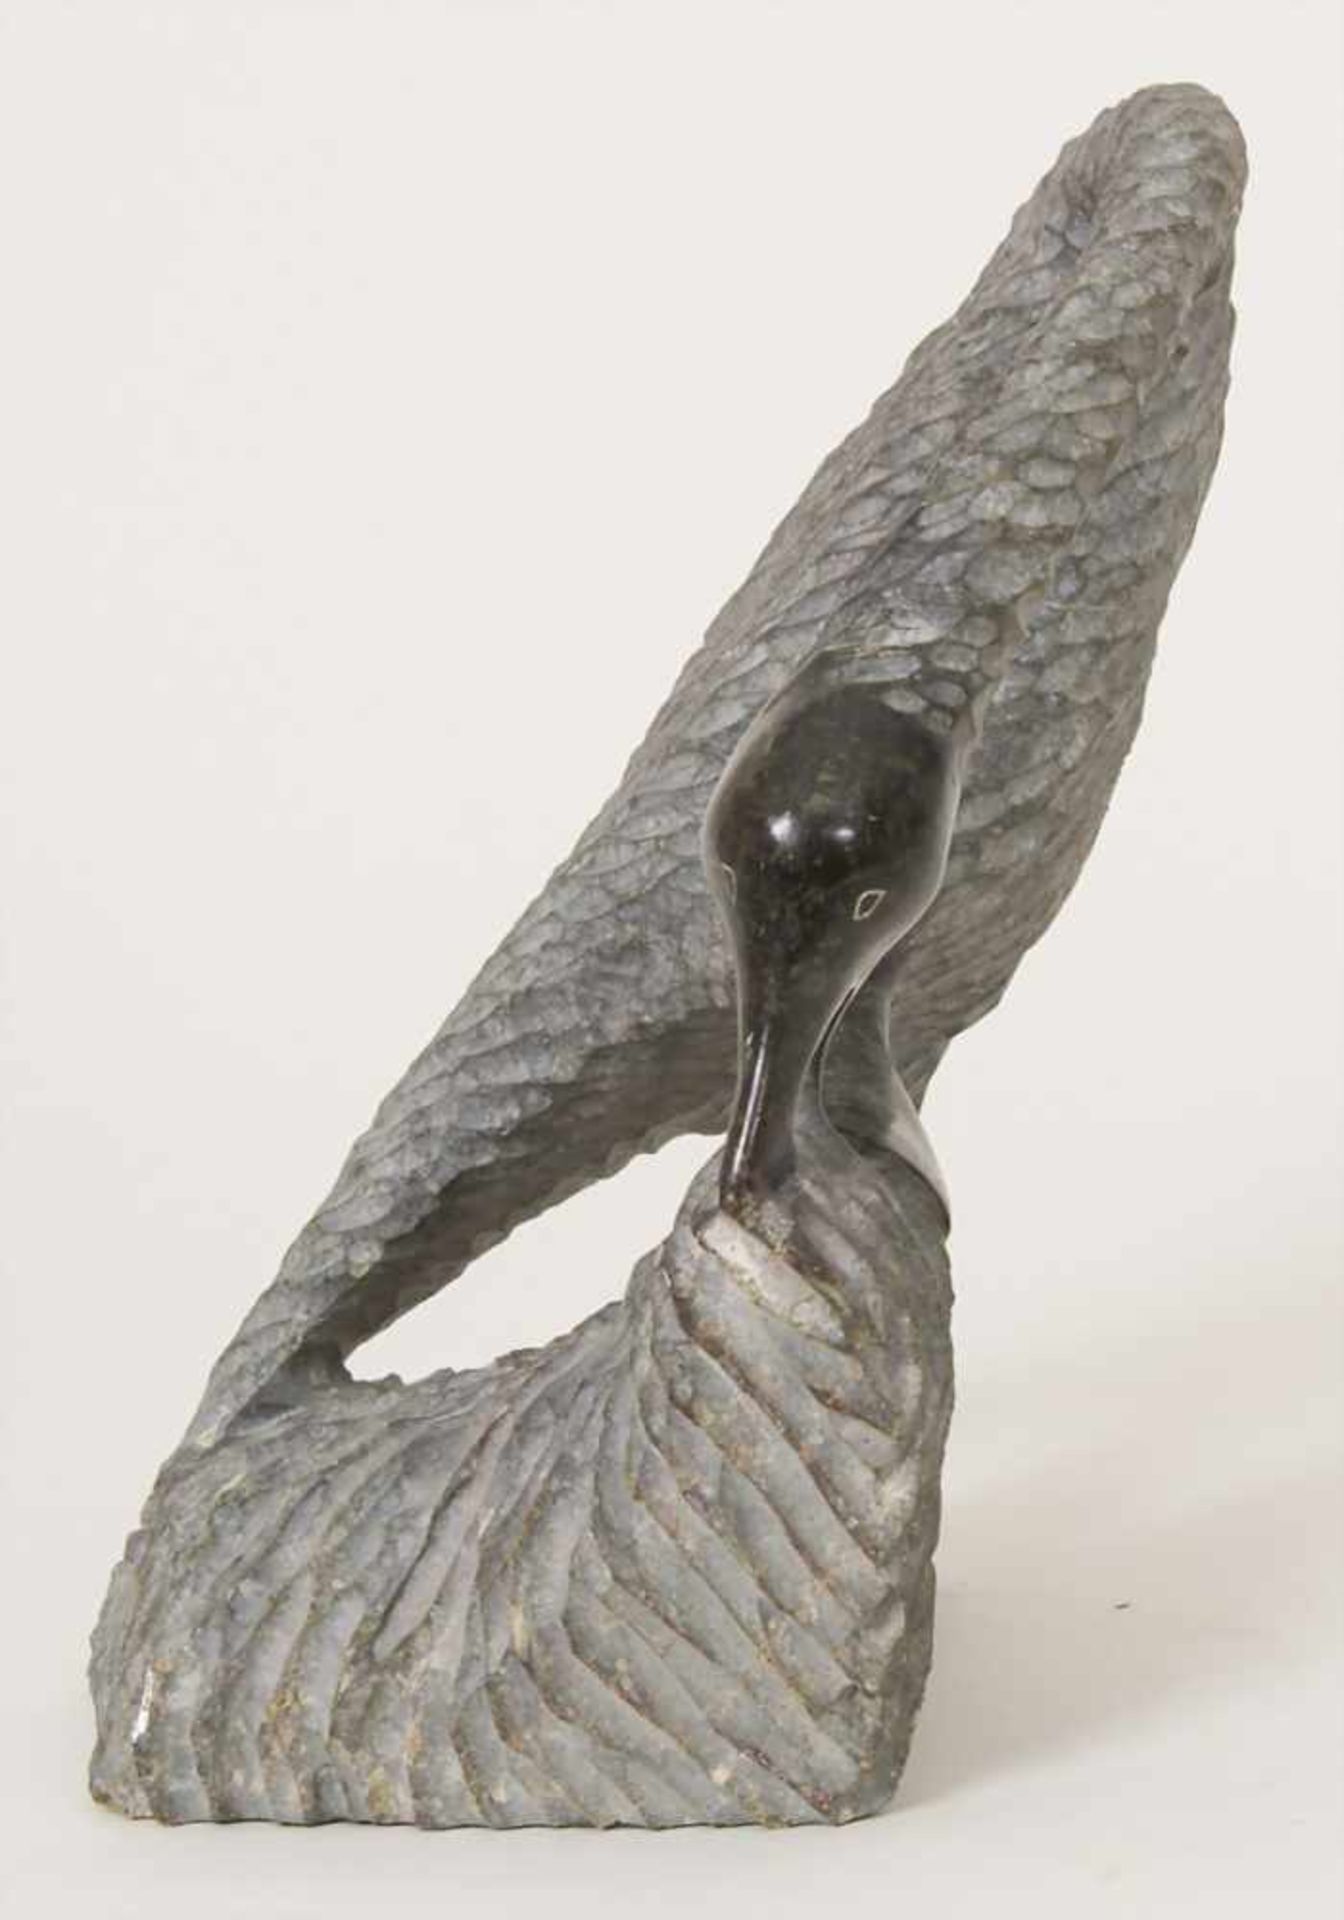 Tierfigur 'Wasservogel' / An animal figure 'Water bird', wohl Afrika, 20. Jh.Material: Speckstein, - Image 6 of 9